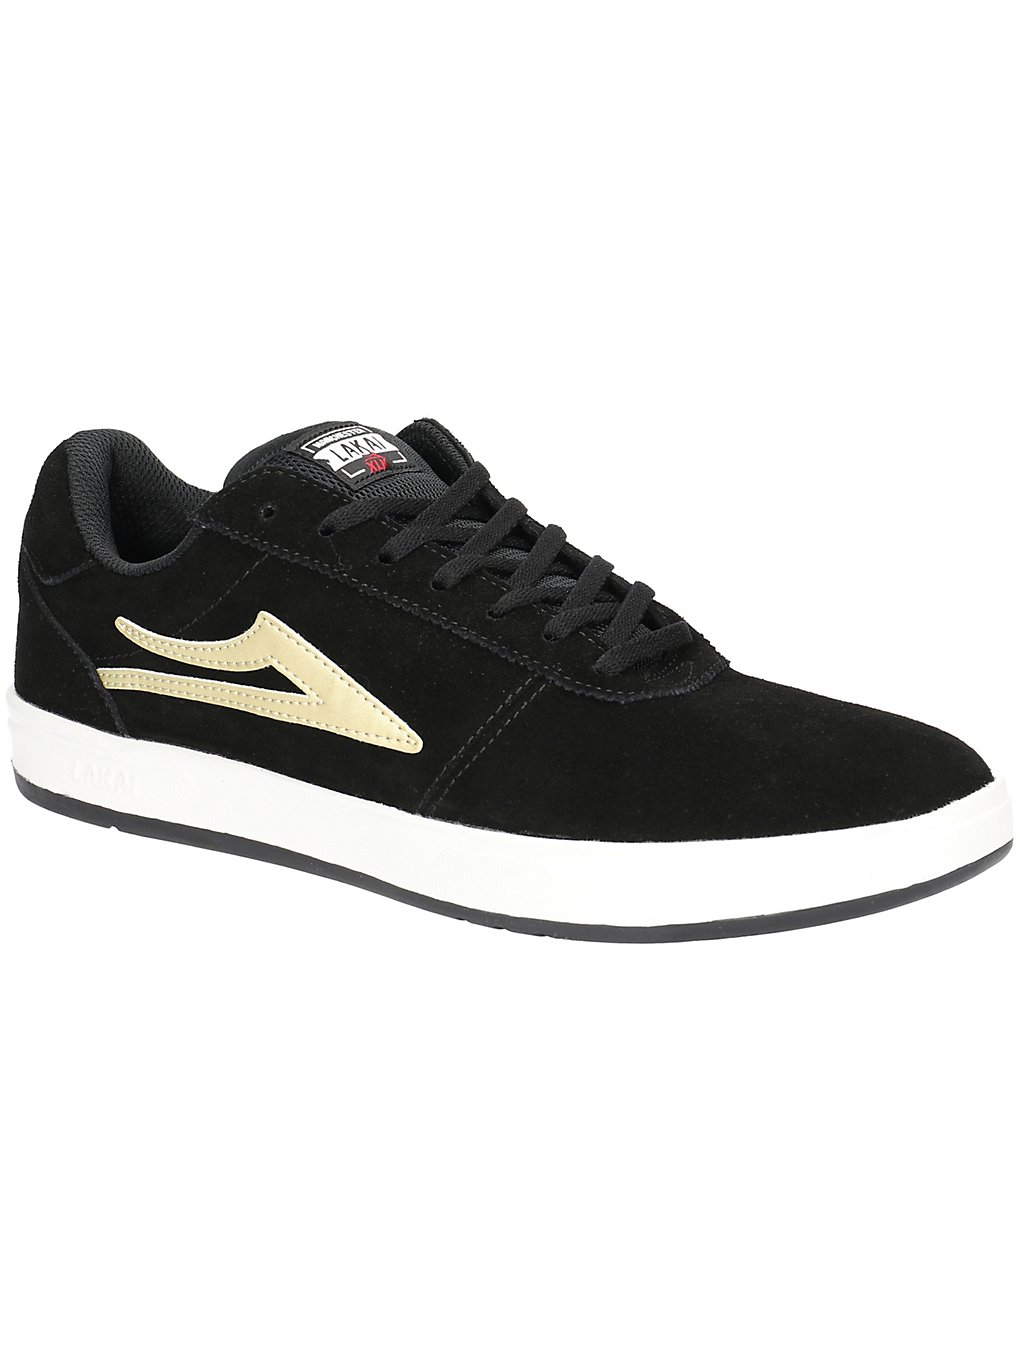 Lakai Manchester XLK Skate Shoes noir